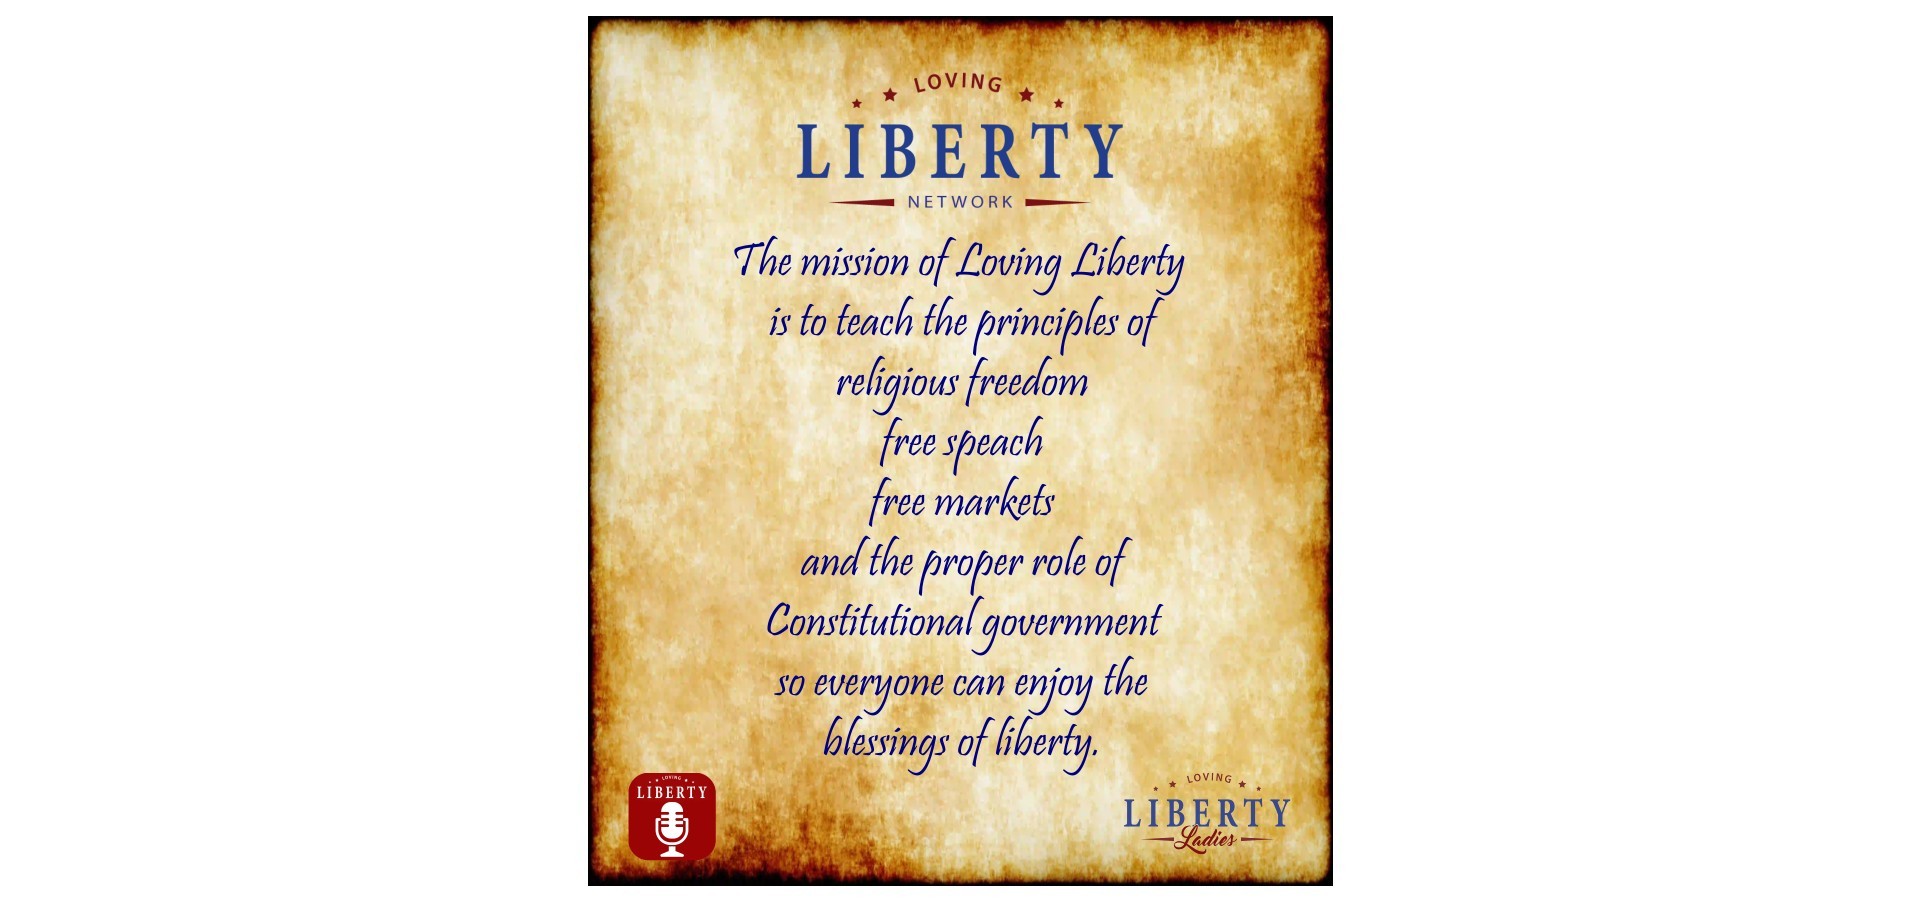 Loving Liberty Network